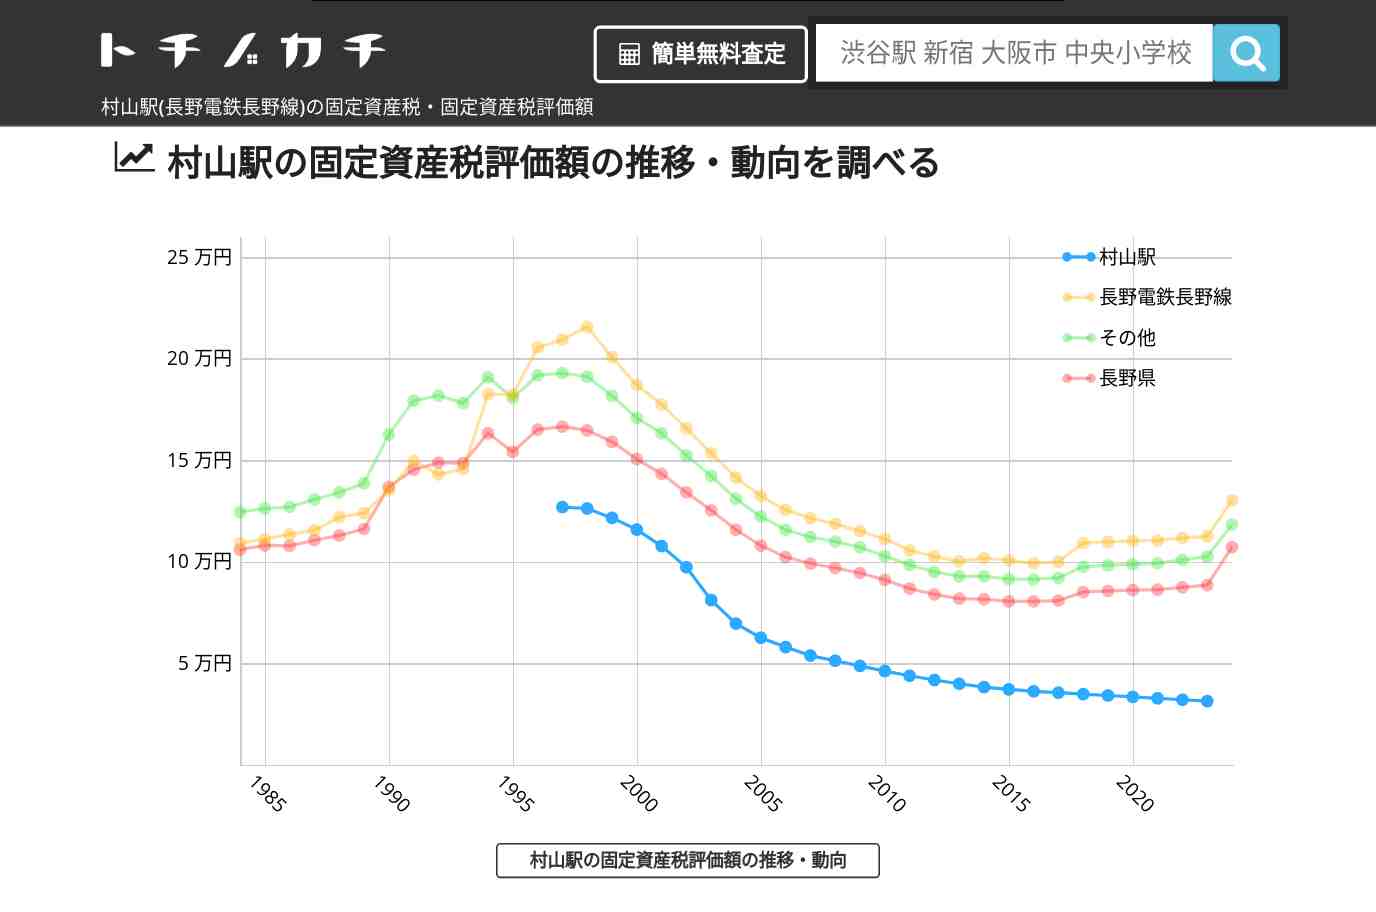 村山駅(長野電鉄長野線)の固定資産税・固定資産税評価額 | トチノカチ